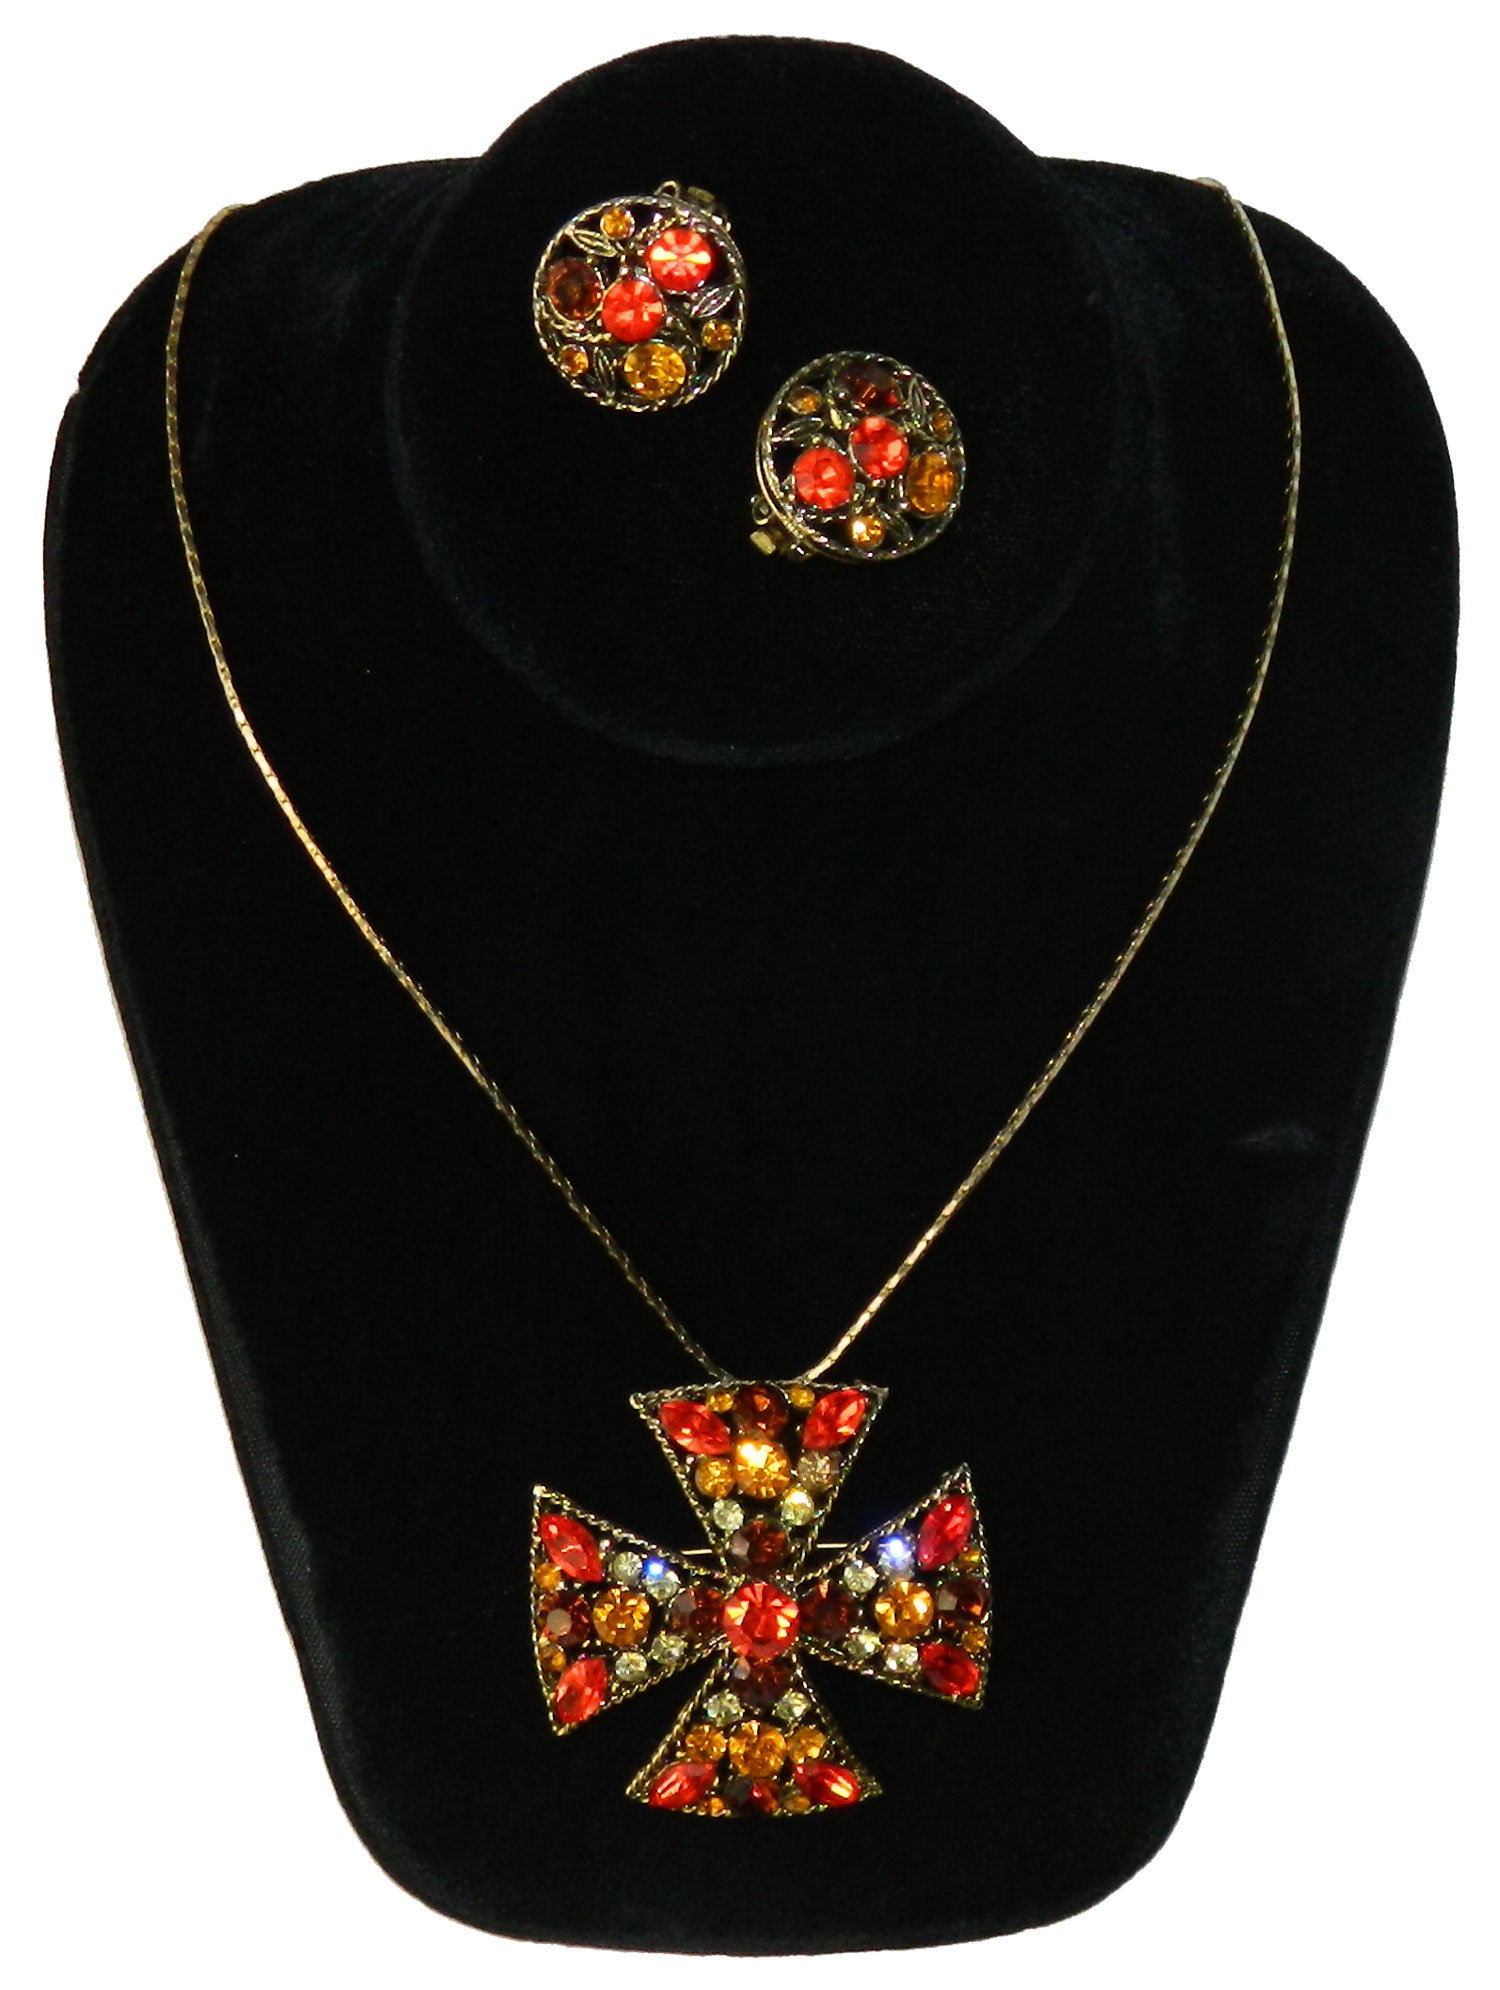 Maltese cross pendant necklace set